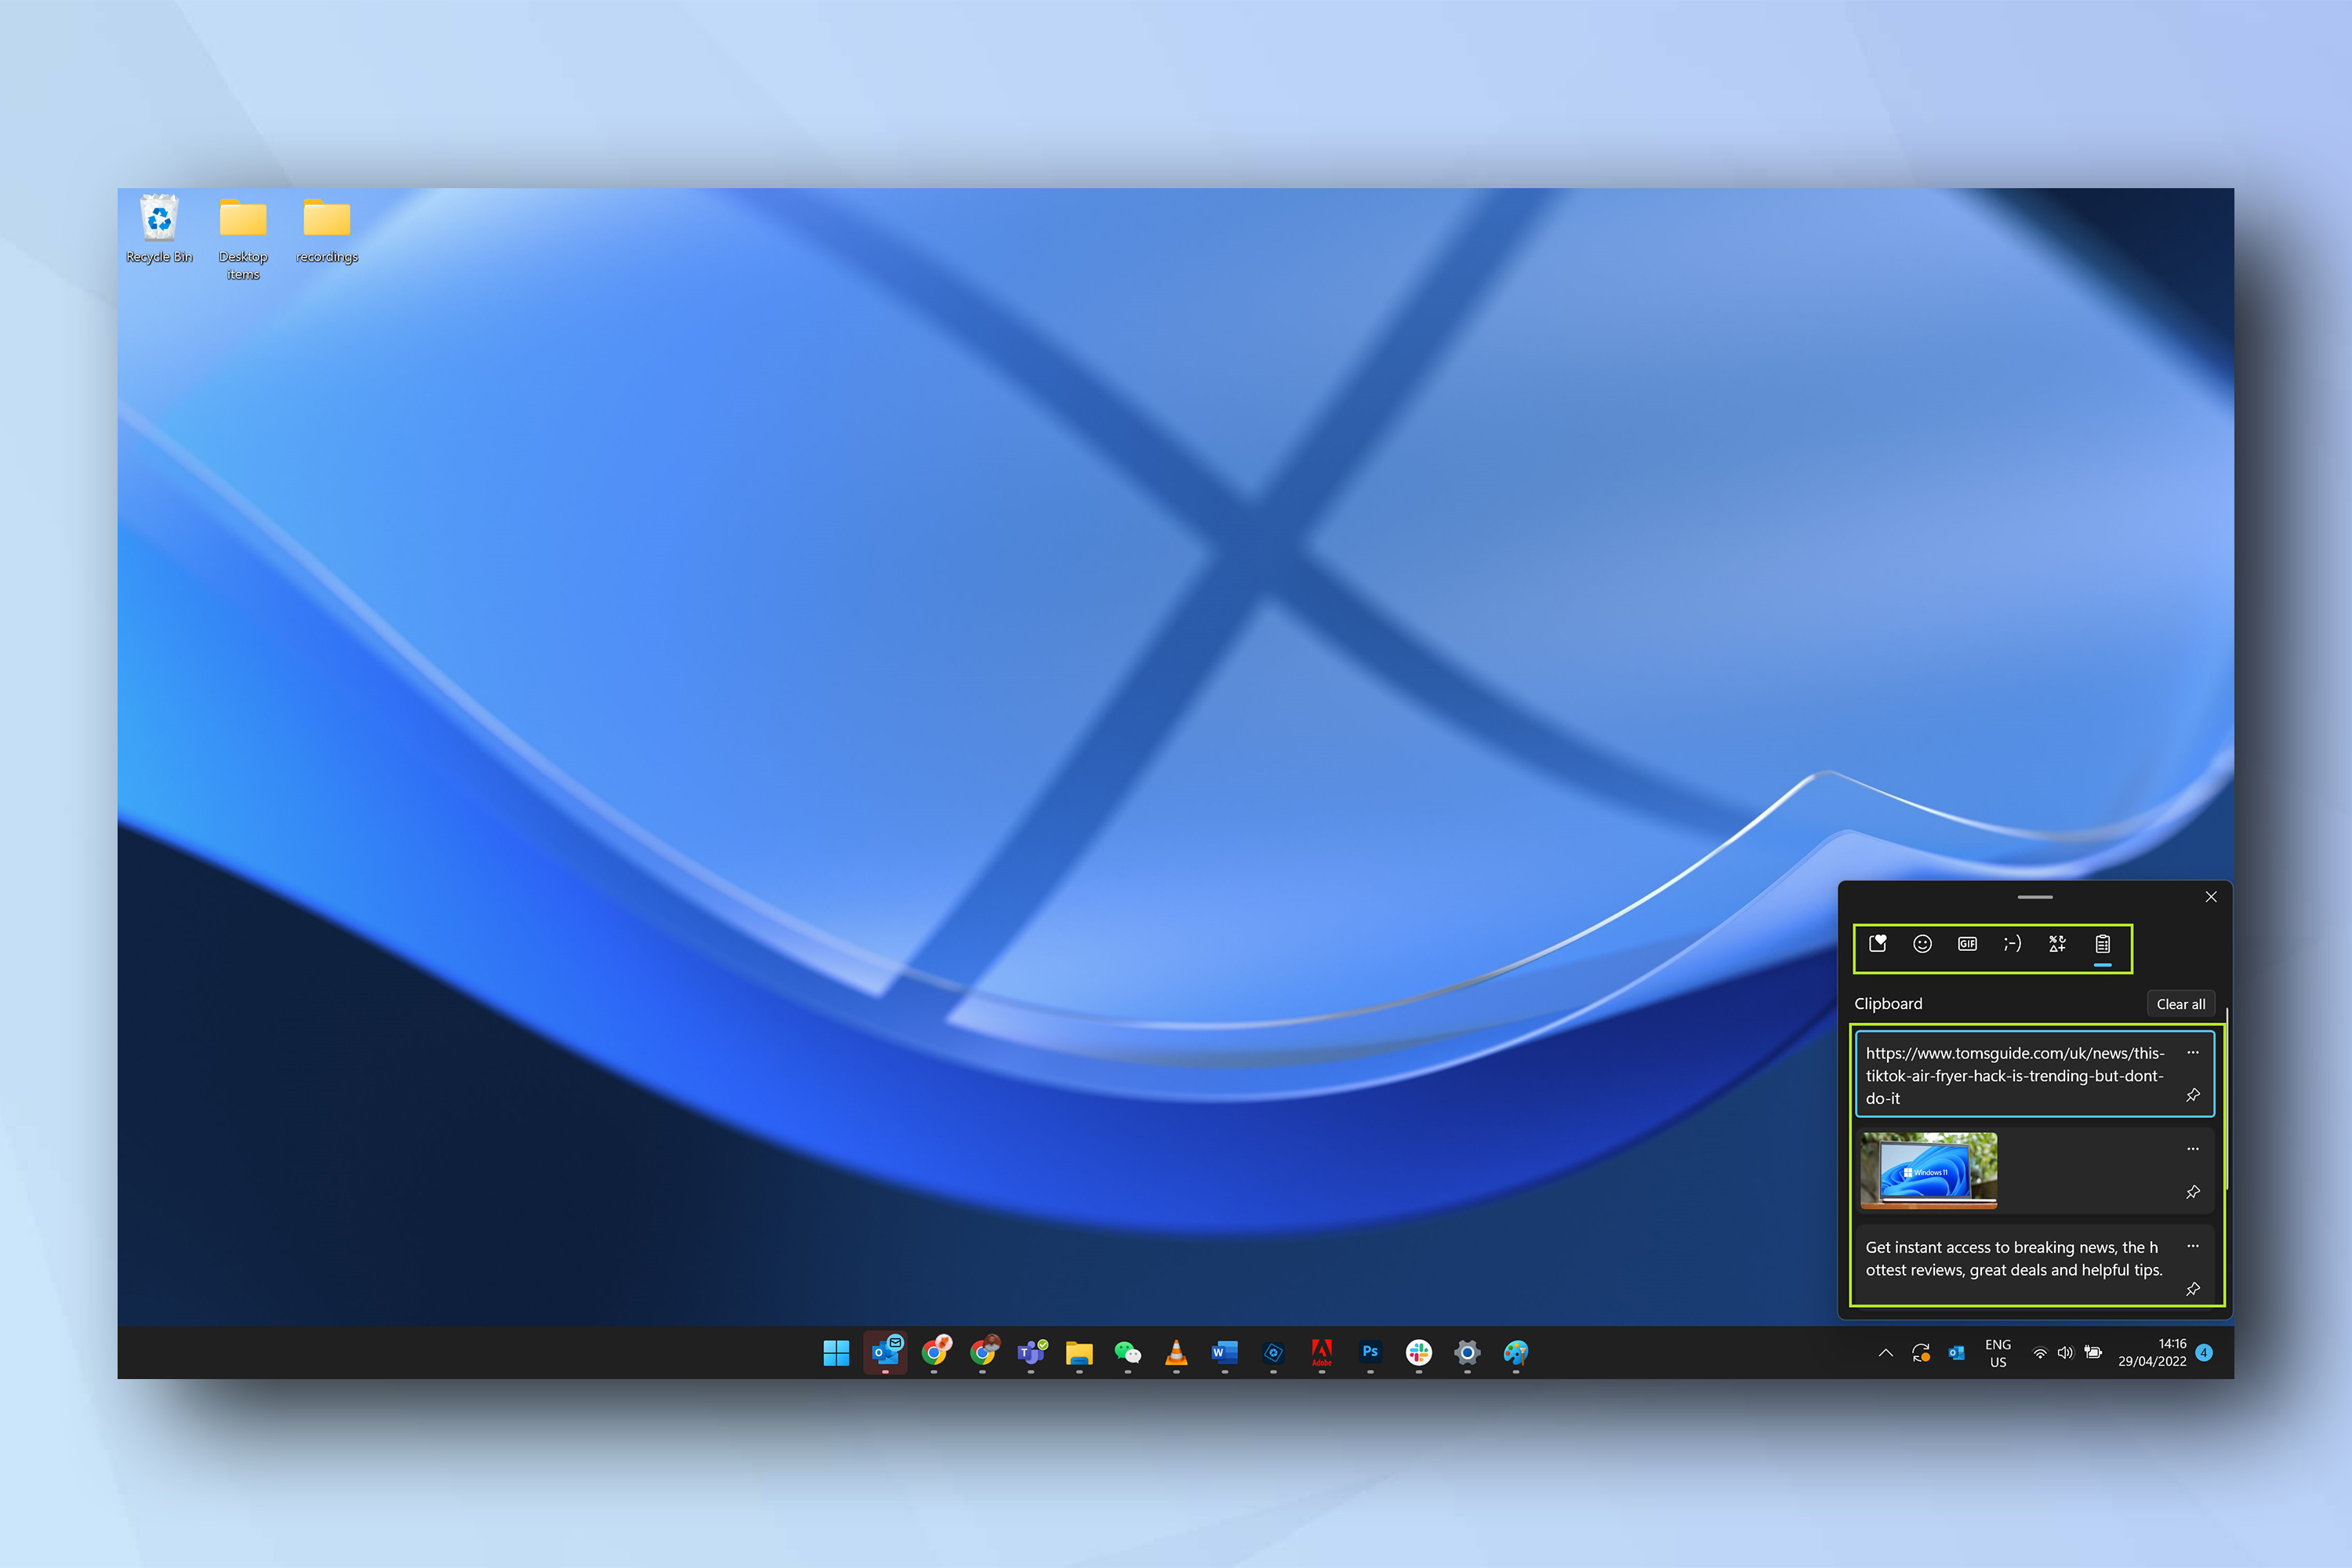 Windows 11 clipboard window showing how to enable clipboard history in Windows